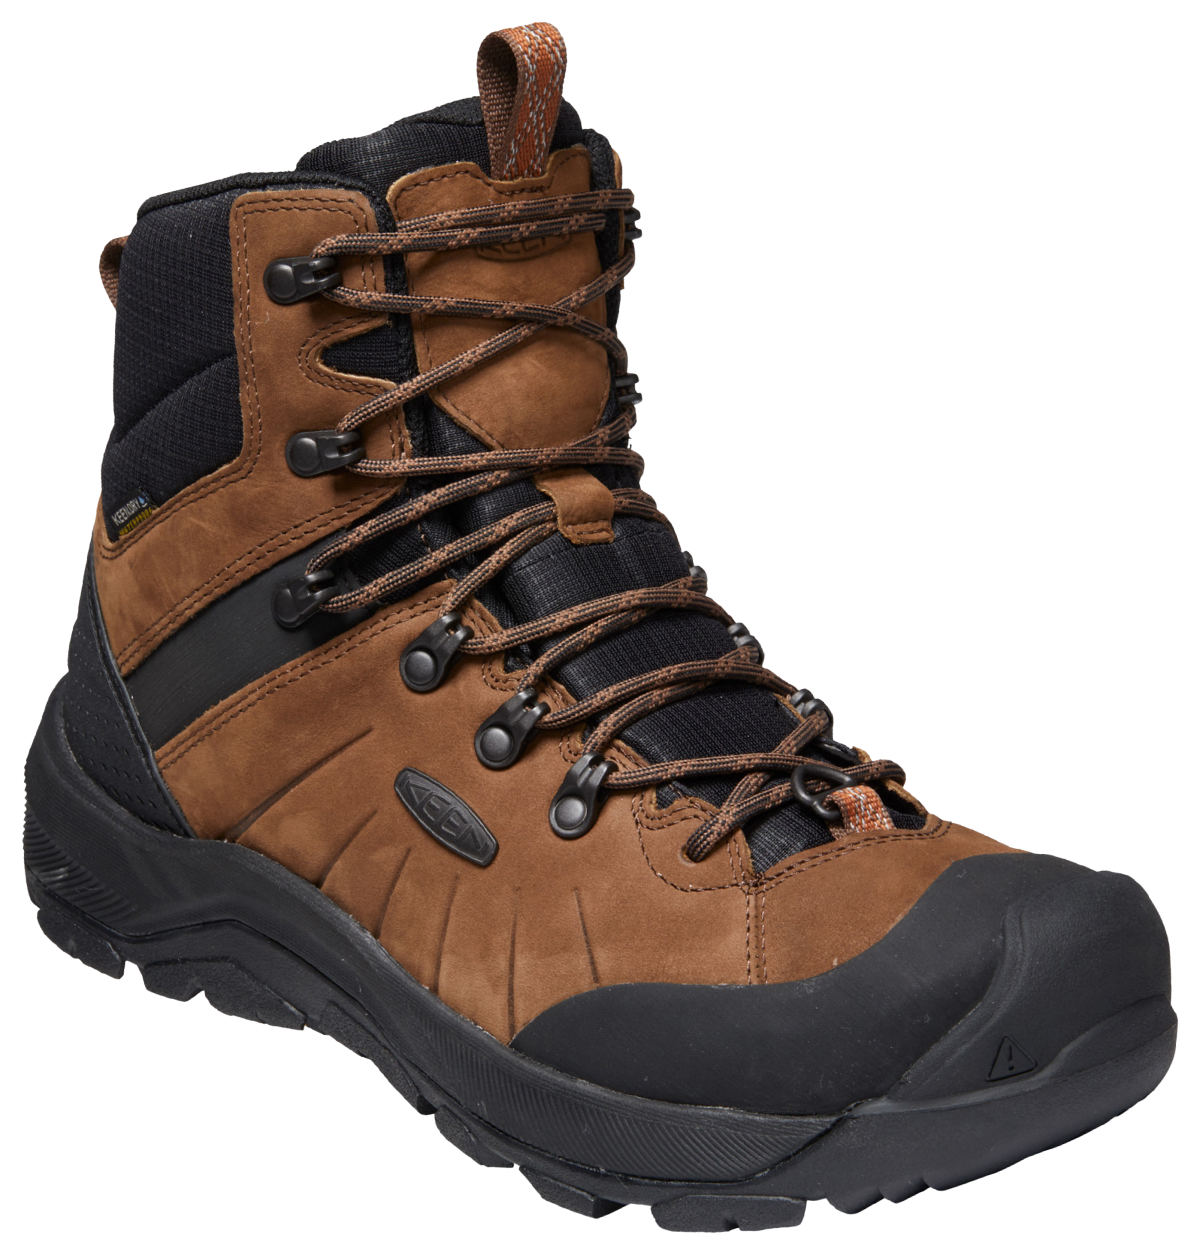 KEEN Revel IV Polar Insulated Waterproof Hiking Boots for Men - Dark Earth/Caramel Cafe - 8.5M